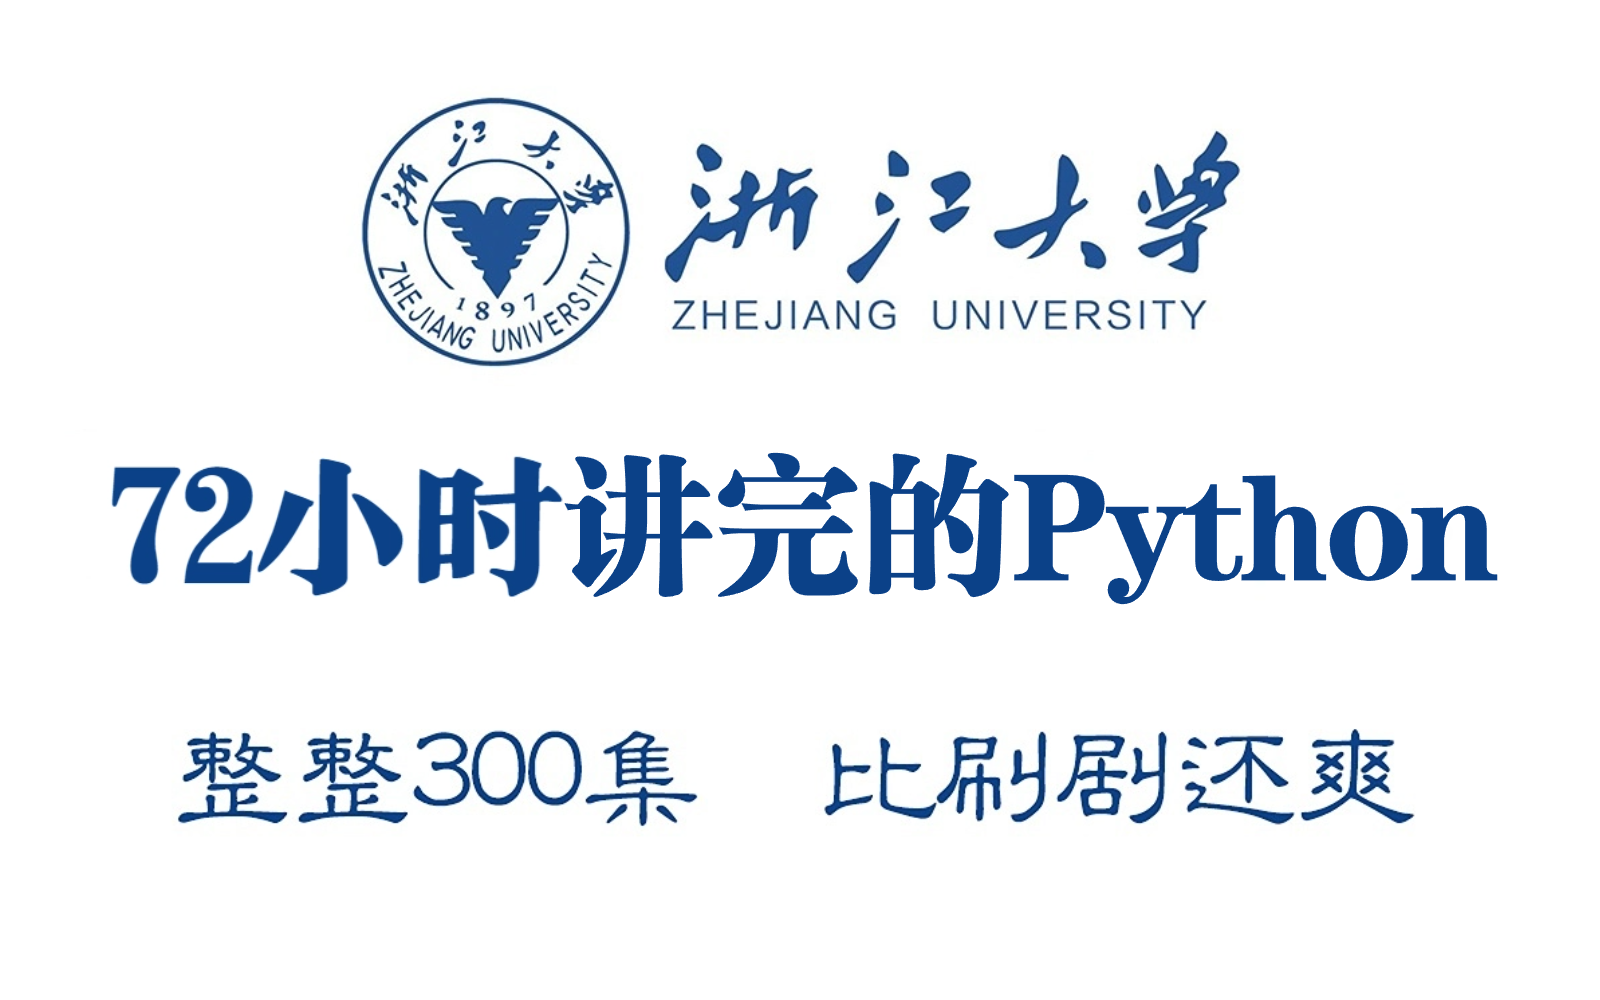 【Python教程】浙江大学72小时讲完的Python（完整版）零基础课程，整整300集，2024最新版，学完即可就业，小白进阶大神，比刷剧还爽！